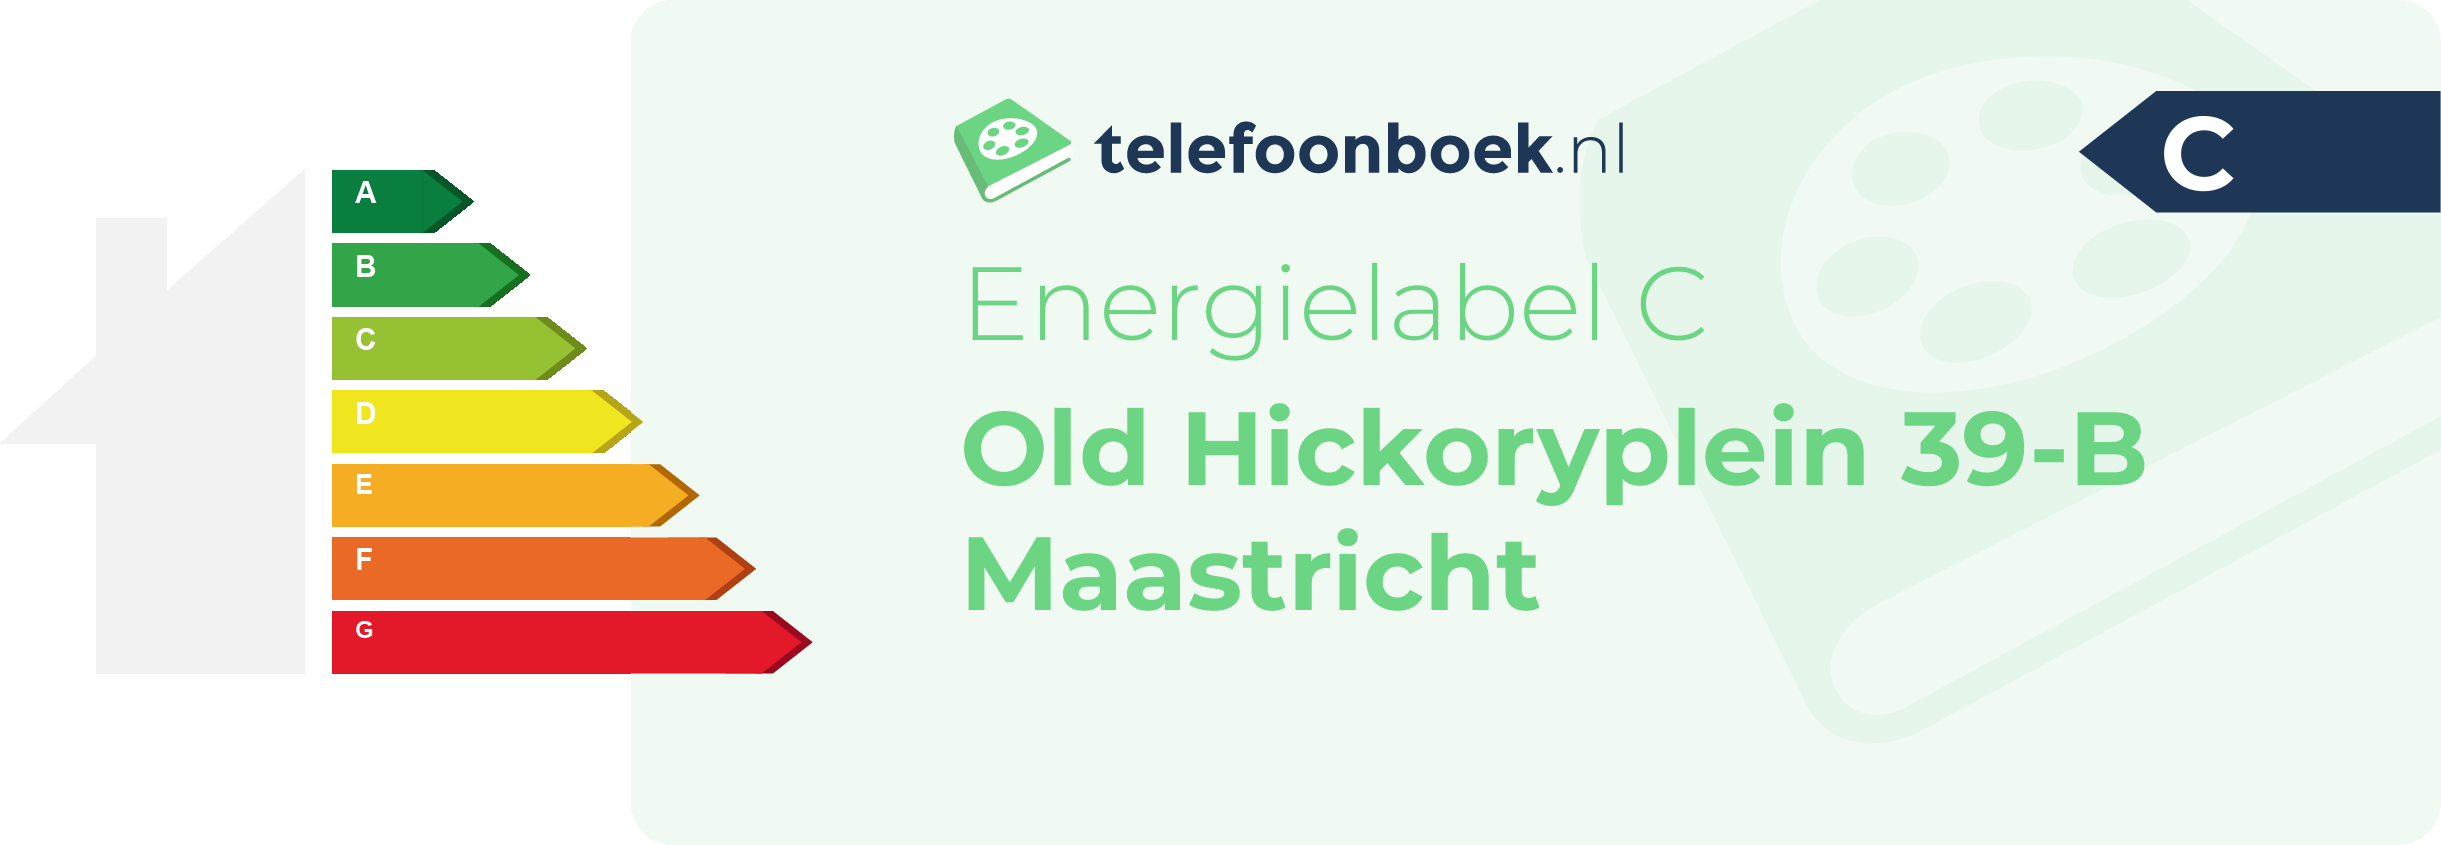 Energielabel Old Hickoryplein 39-B Maastricht